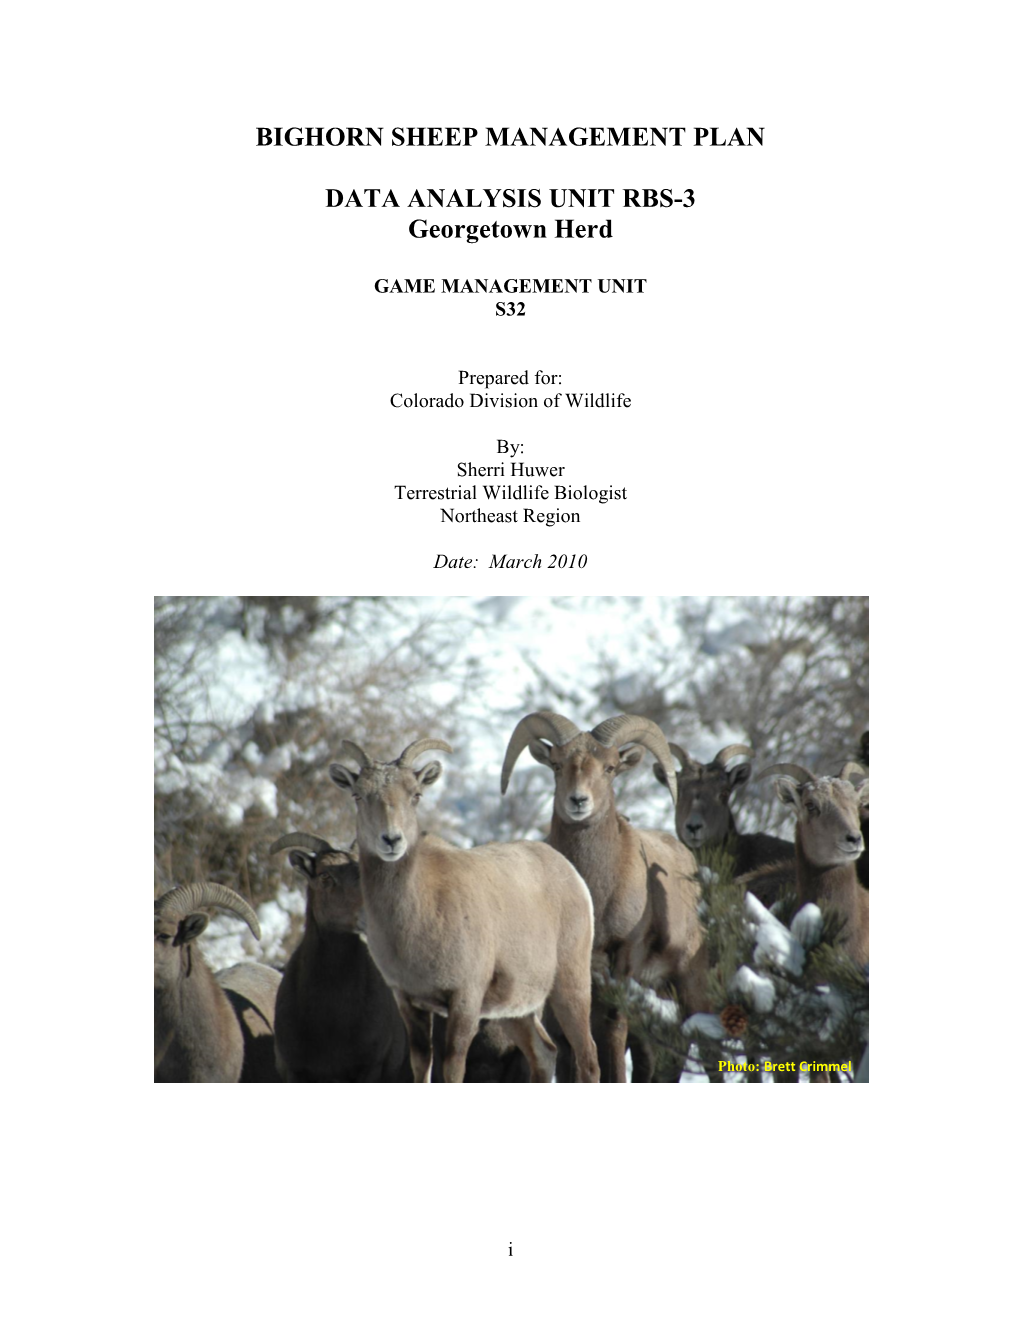 BIGHORN SHEEP MANAGEMENT PLAN for Data Analysis Unit RBS-3